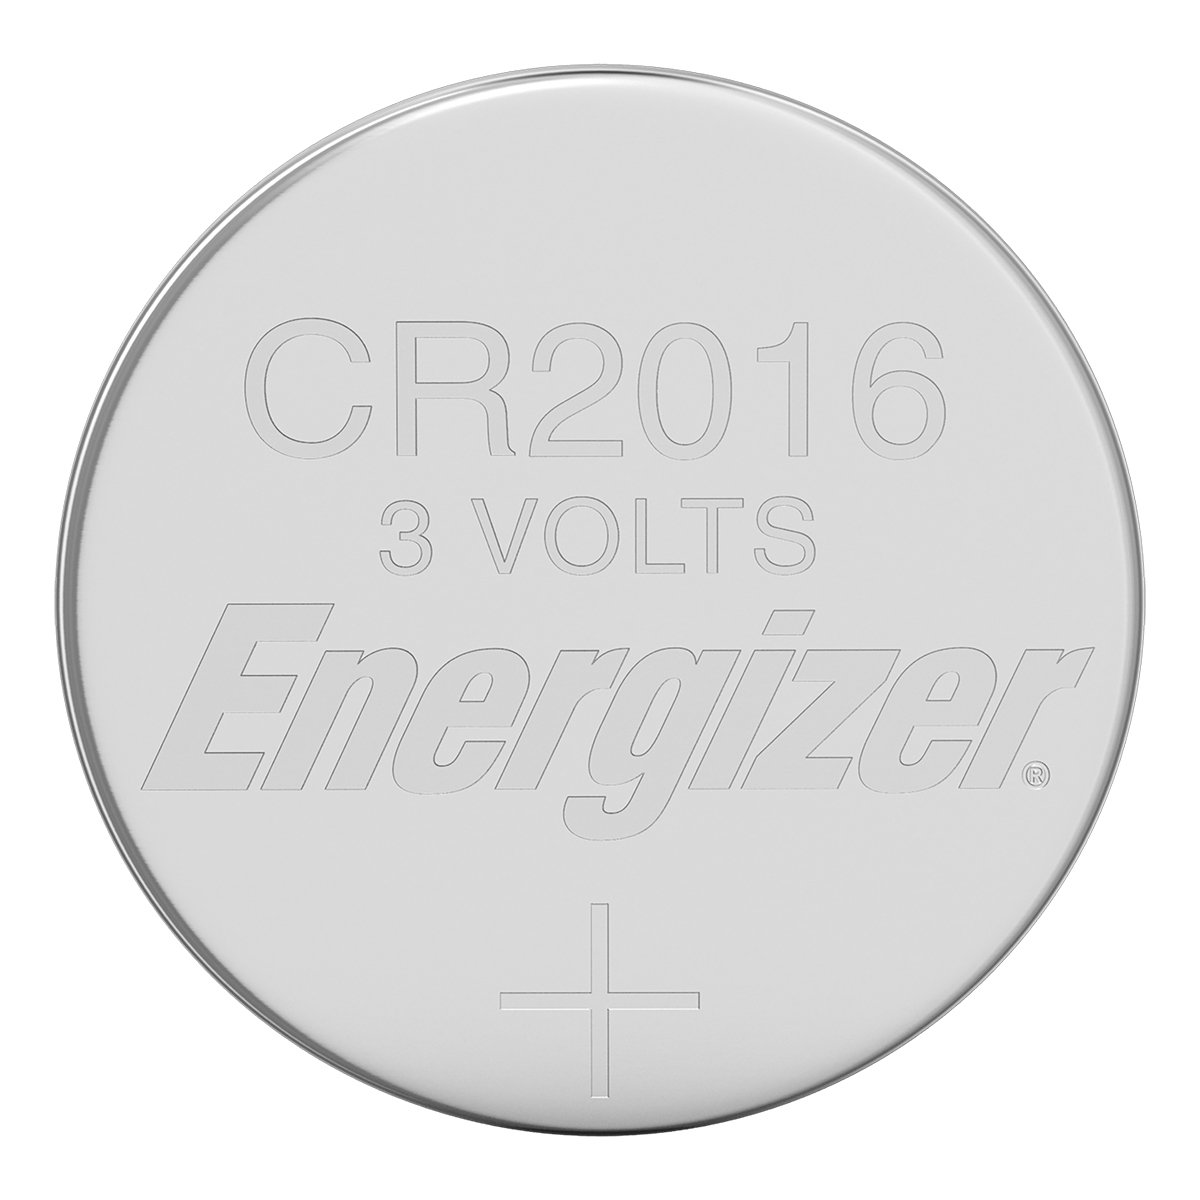 Energizer Lithiumbatterien CR2016